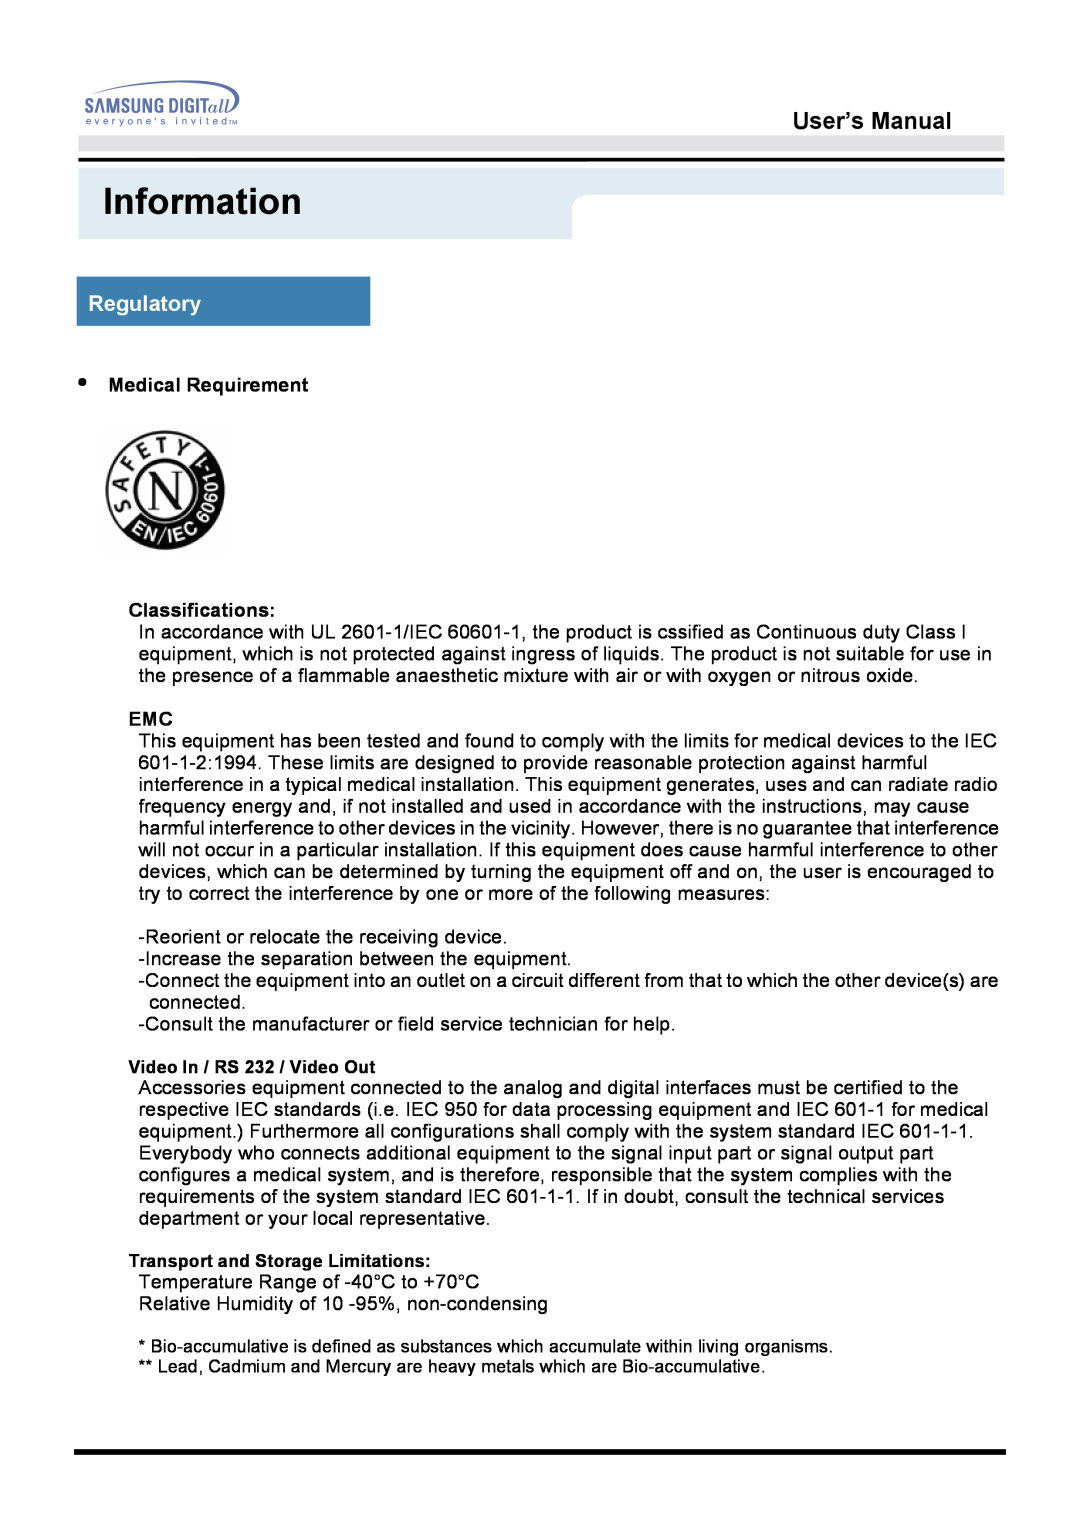 Samsung 151D user manual Information, User’s Manual, Regulatory, Medical Requirement Classifications 